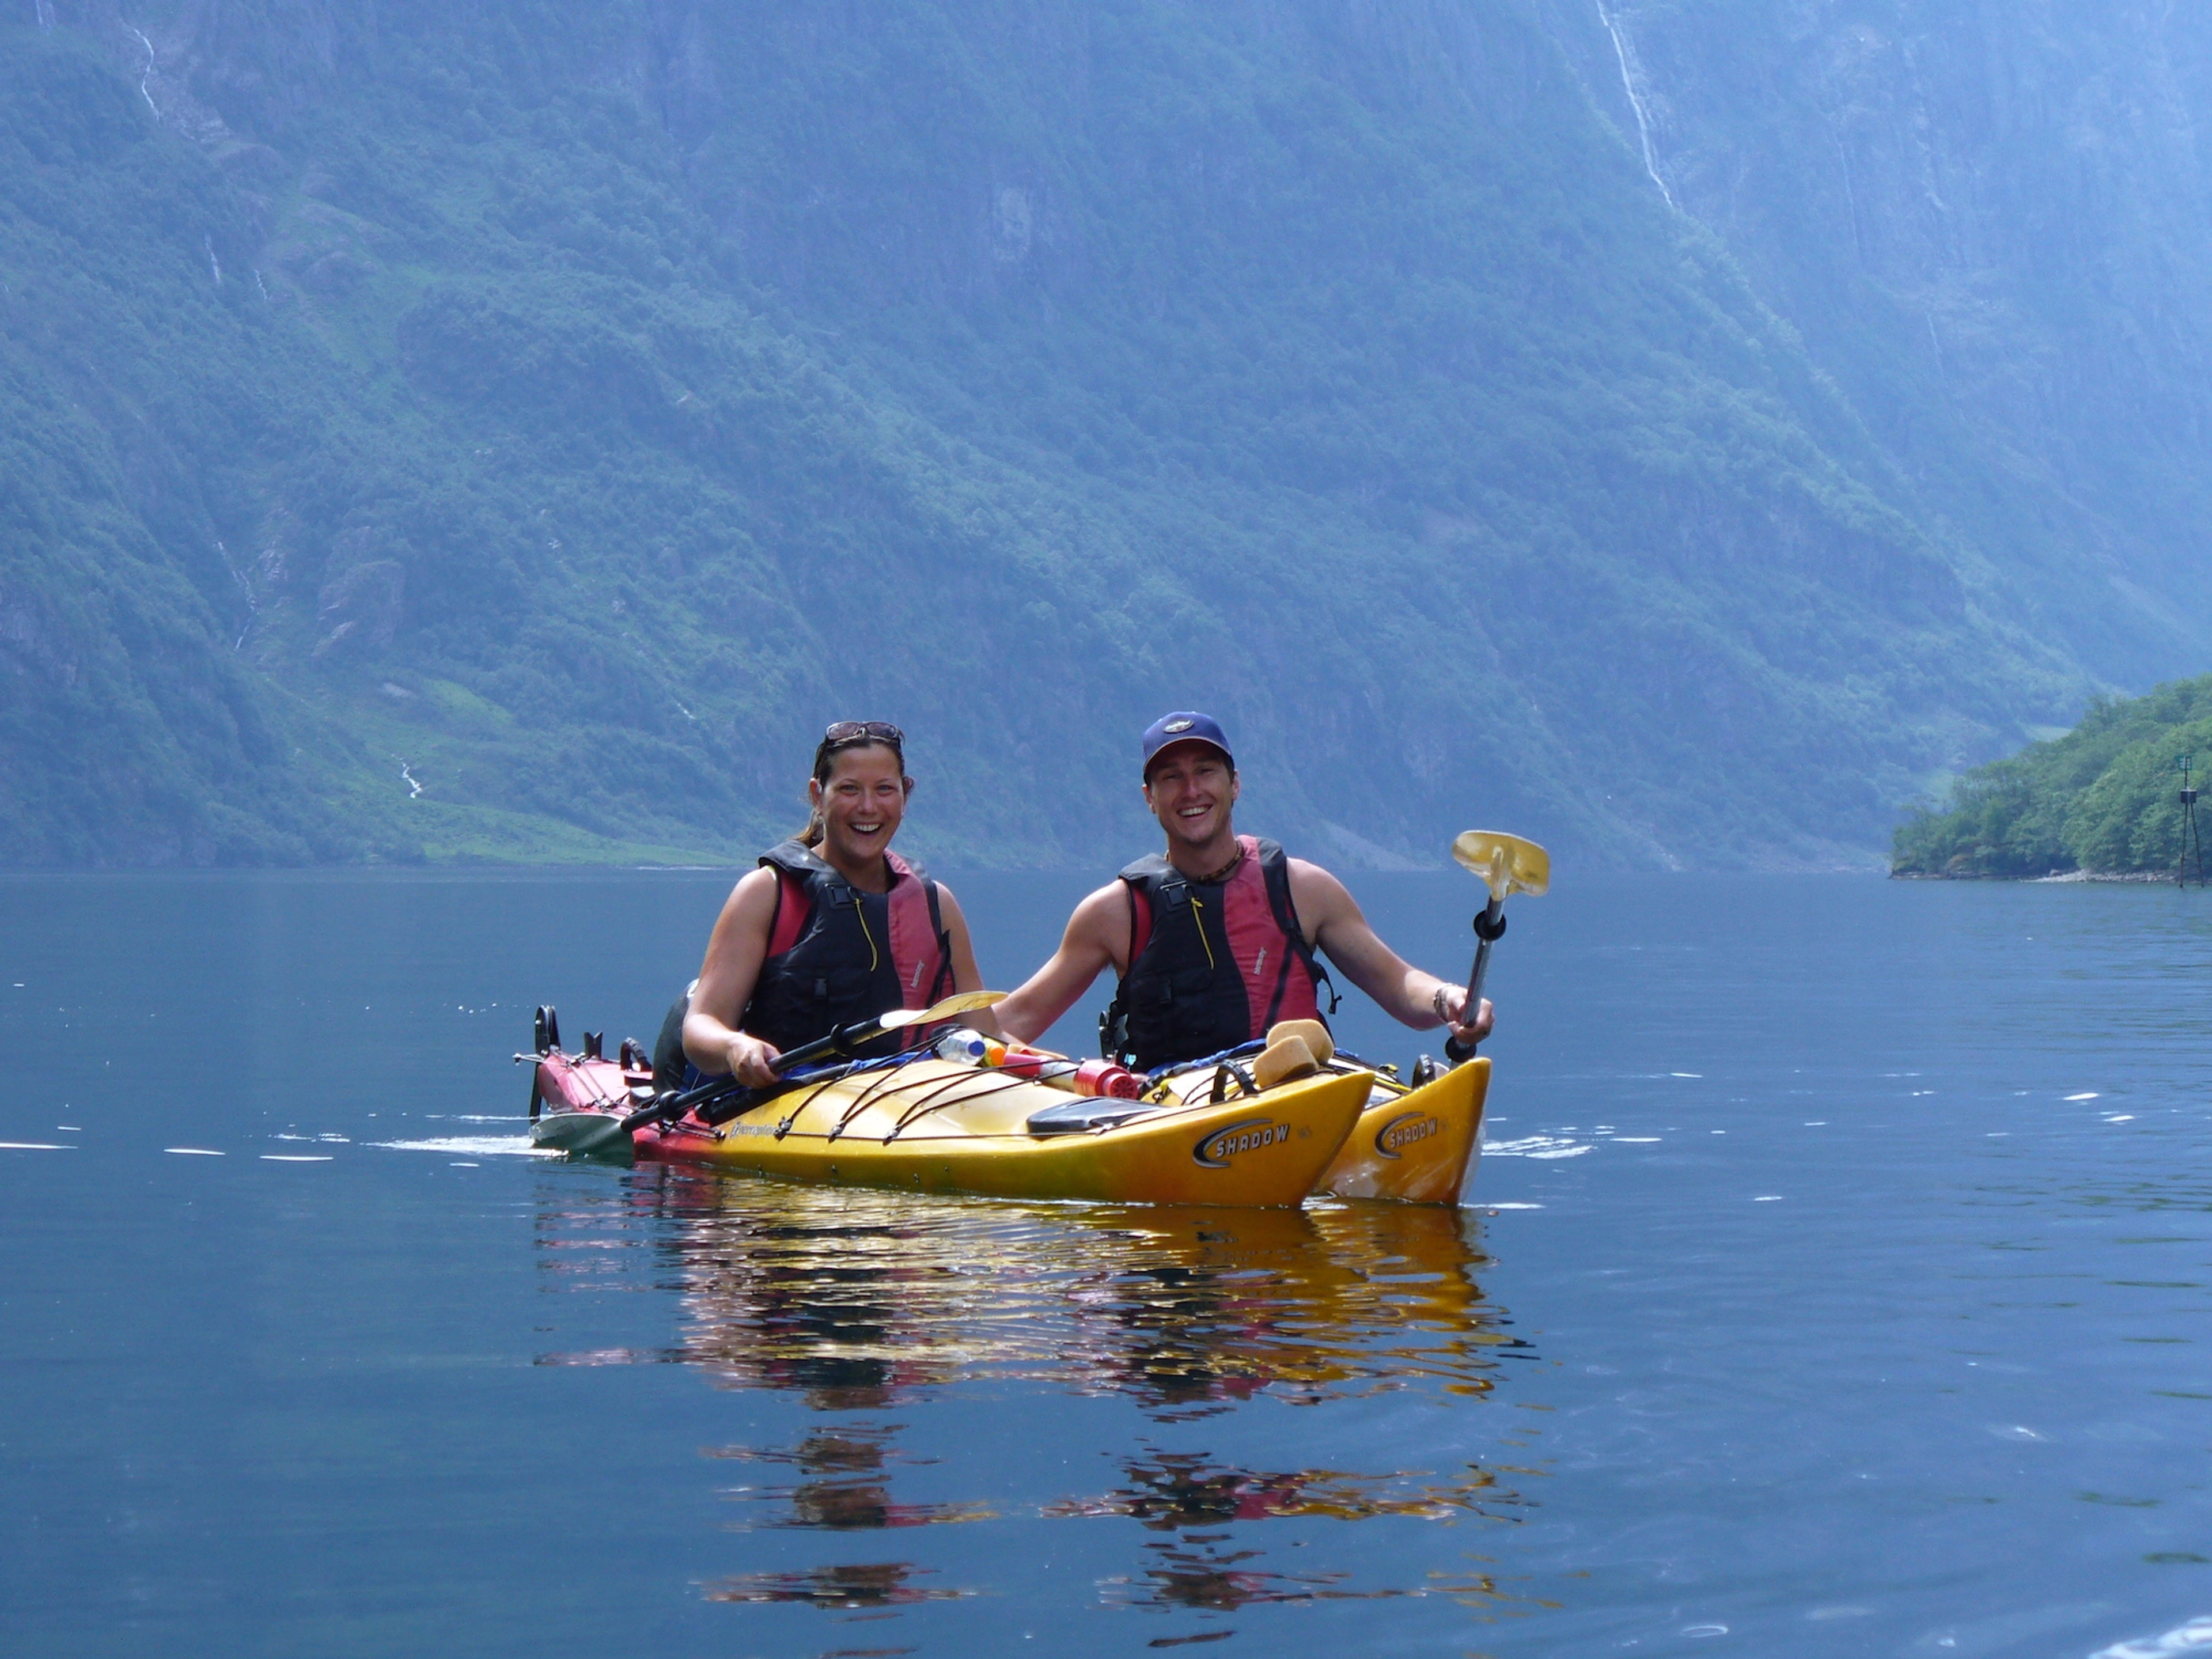 Guided kayak trip on the Nærøyfjord, full-day trip - Things to do in Gudvangen, Norway